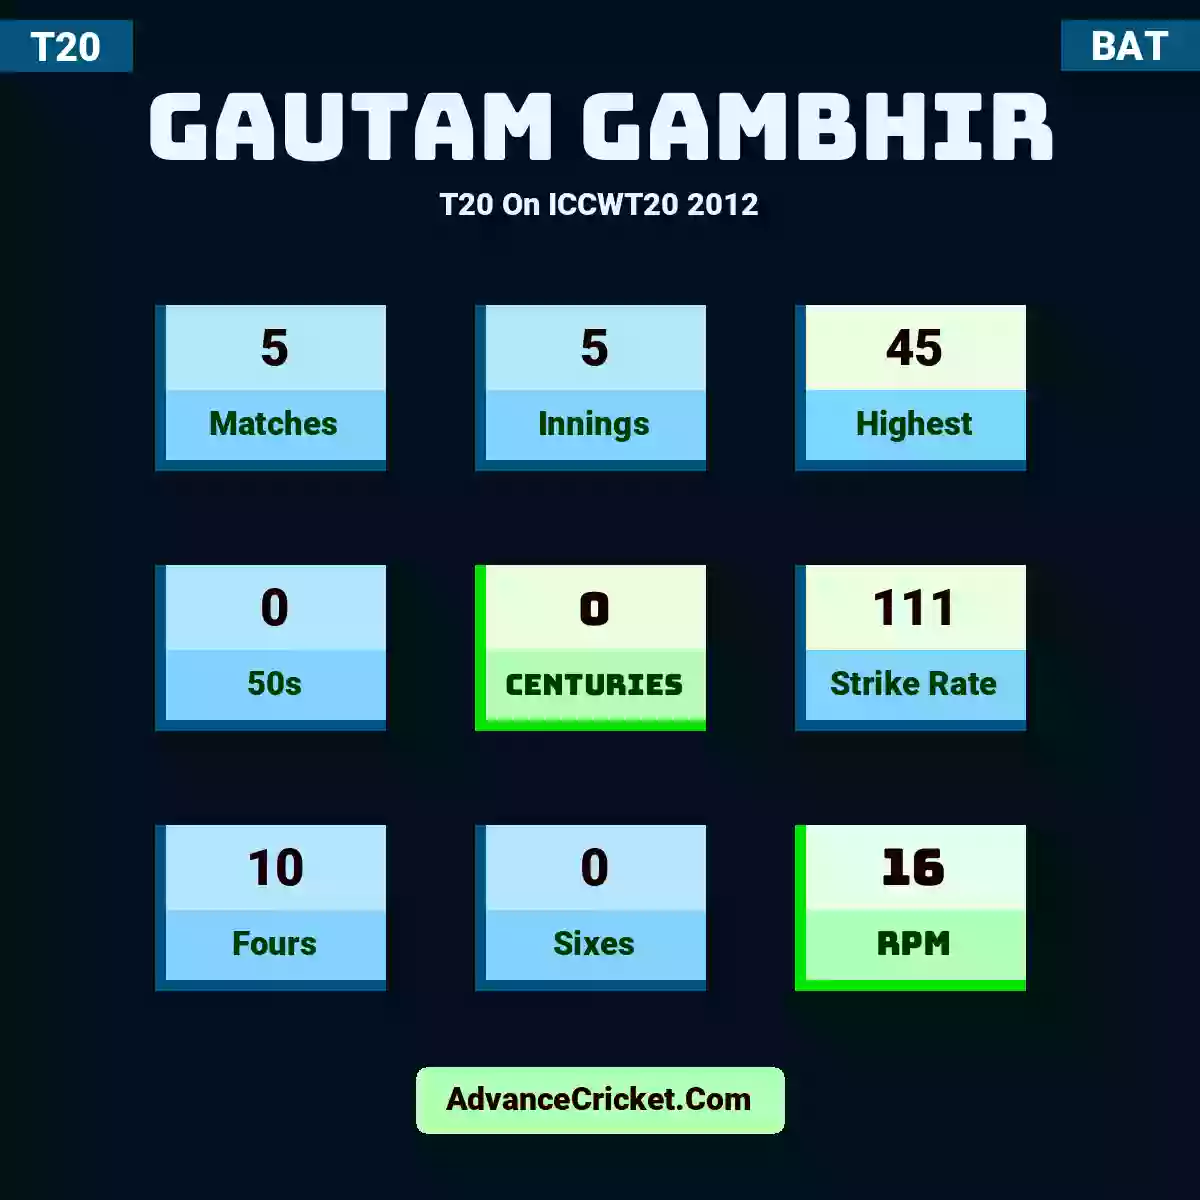 Gautam Gambhir T20  On ICCWT20 2012, Gautam Gambhir played 5 matches, scored 45 runs as highest, 0 half-centuries, and 0 centuries, with a strike rate of 111. G.Gambhir hit 10 fours and 0 sixes, with an RPM of 16.